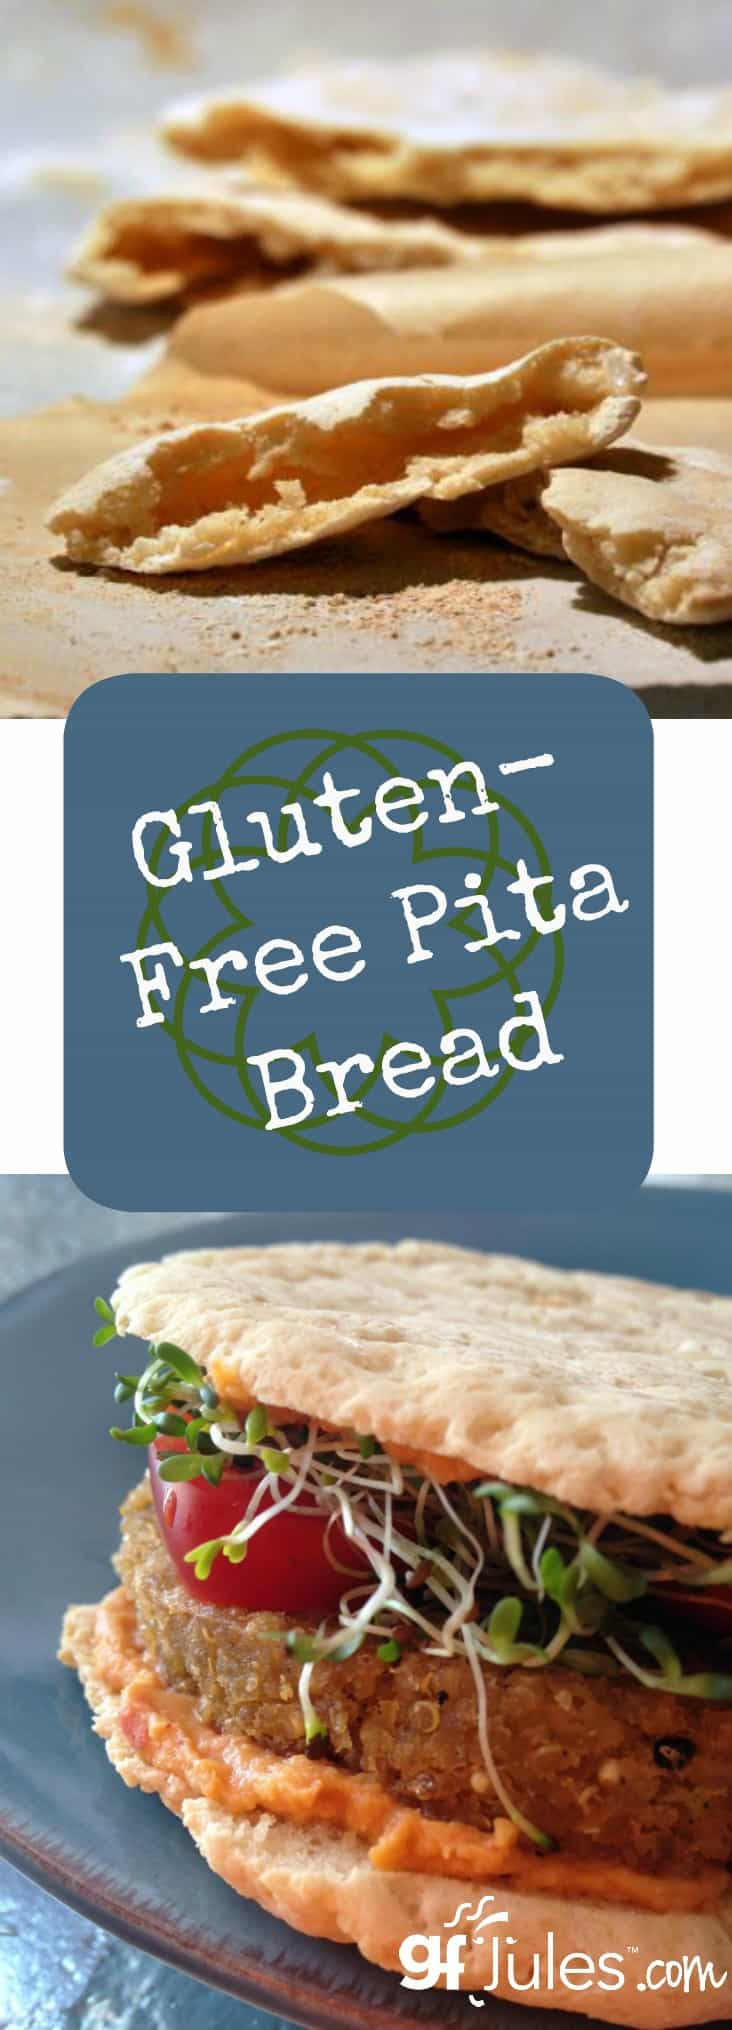 Gluten Free Pita Bread Recipe
 Gluten Free Pita or Naan Flatbreads make em authentic w